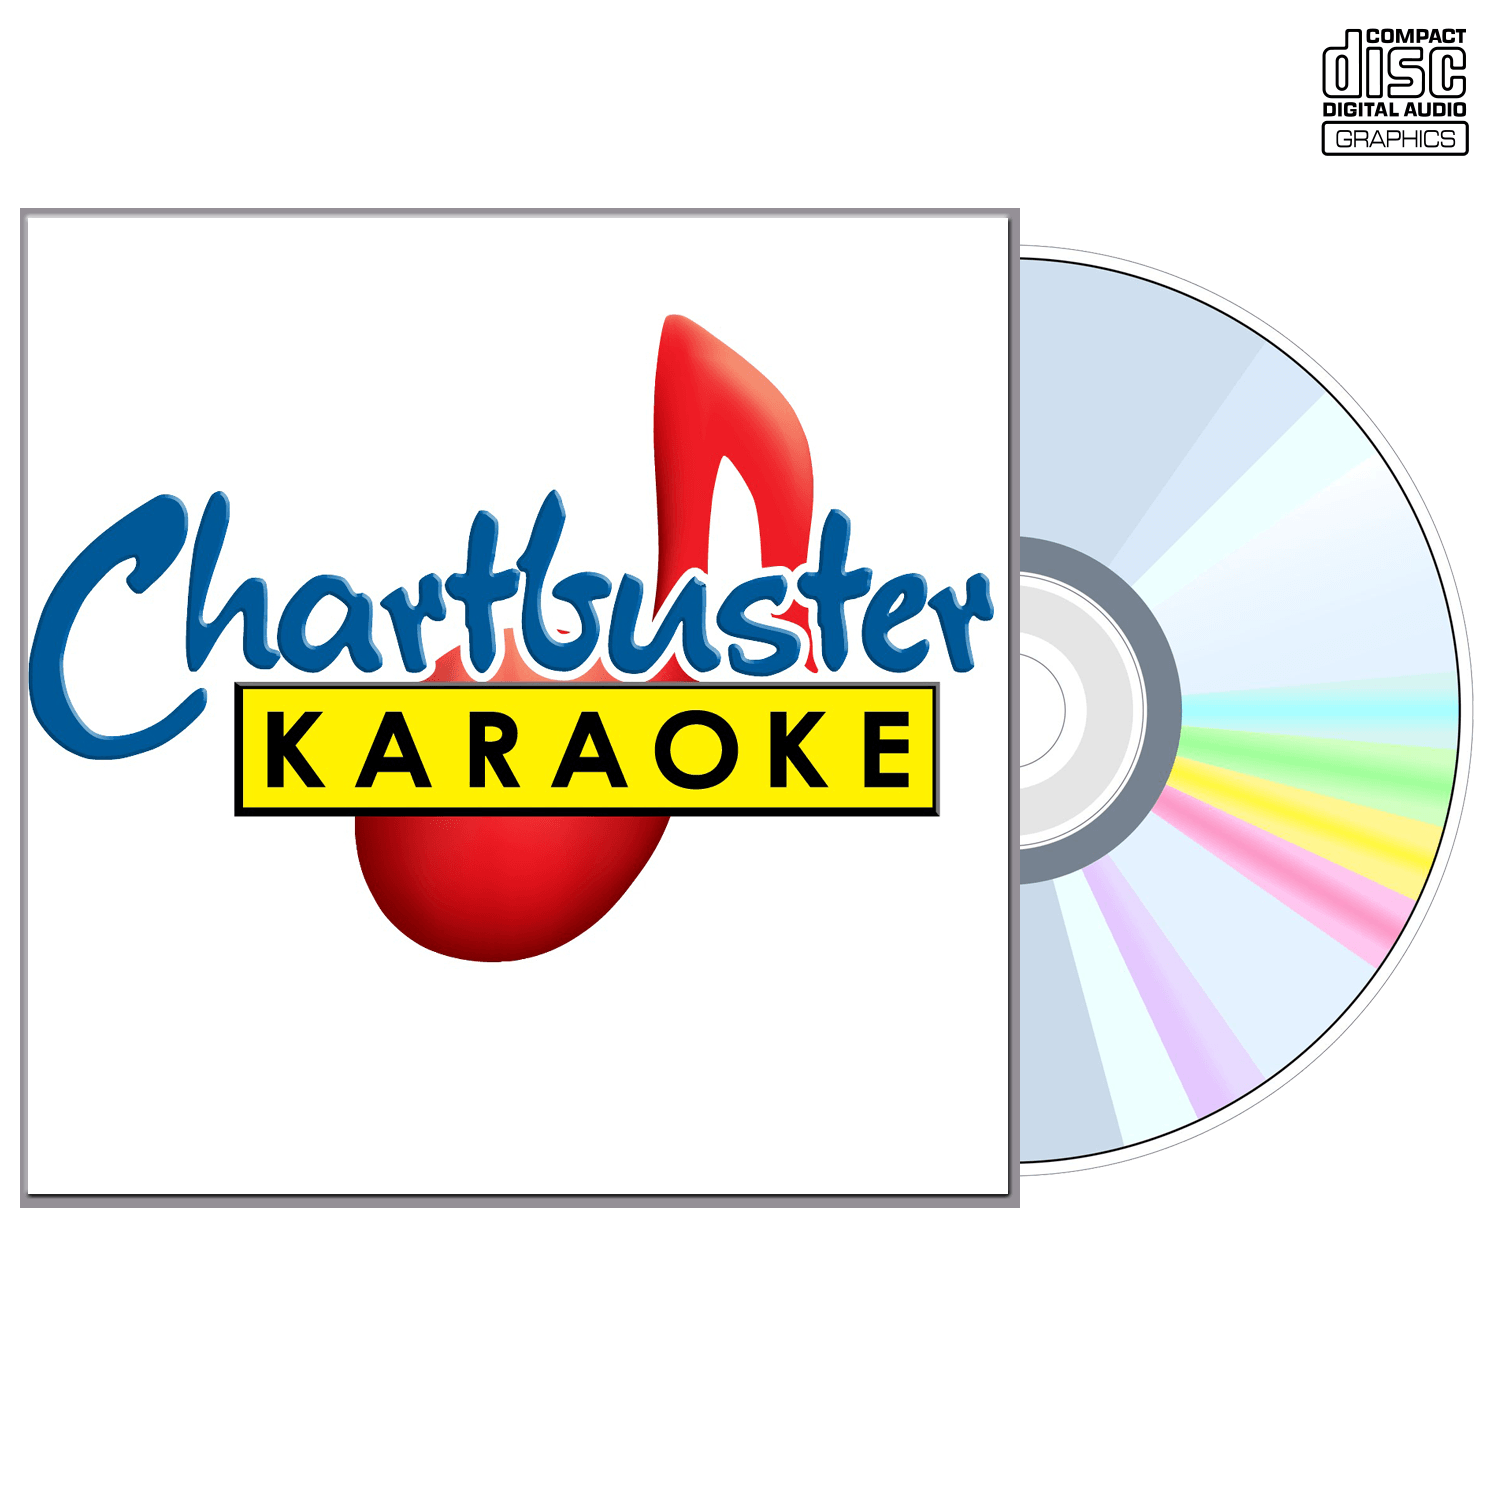 Restless Heart - CD+G - Chartbuster Karaoke - Karaoke Home Entertainment